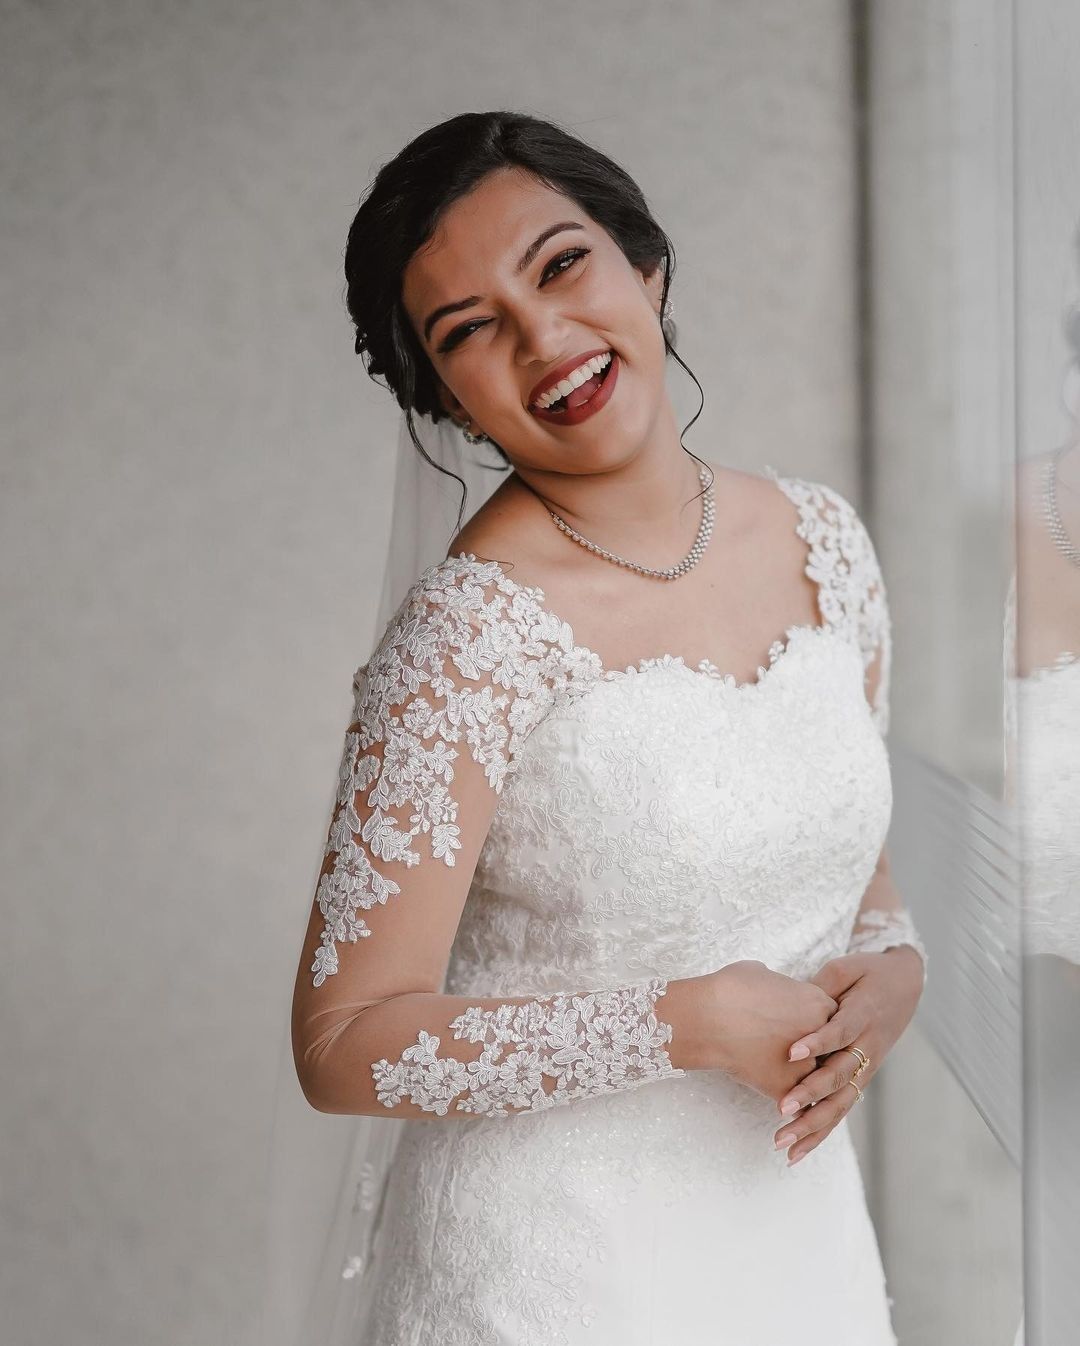 Top 10 Gorgeous Christian Wedding Dresses, Sarees & Gowns